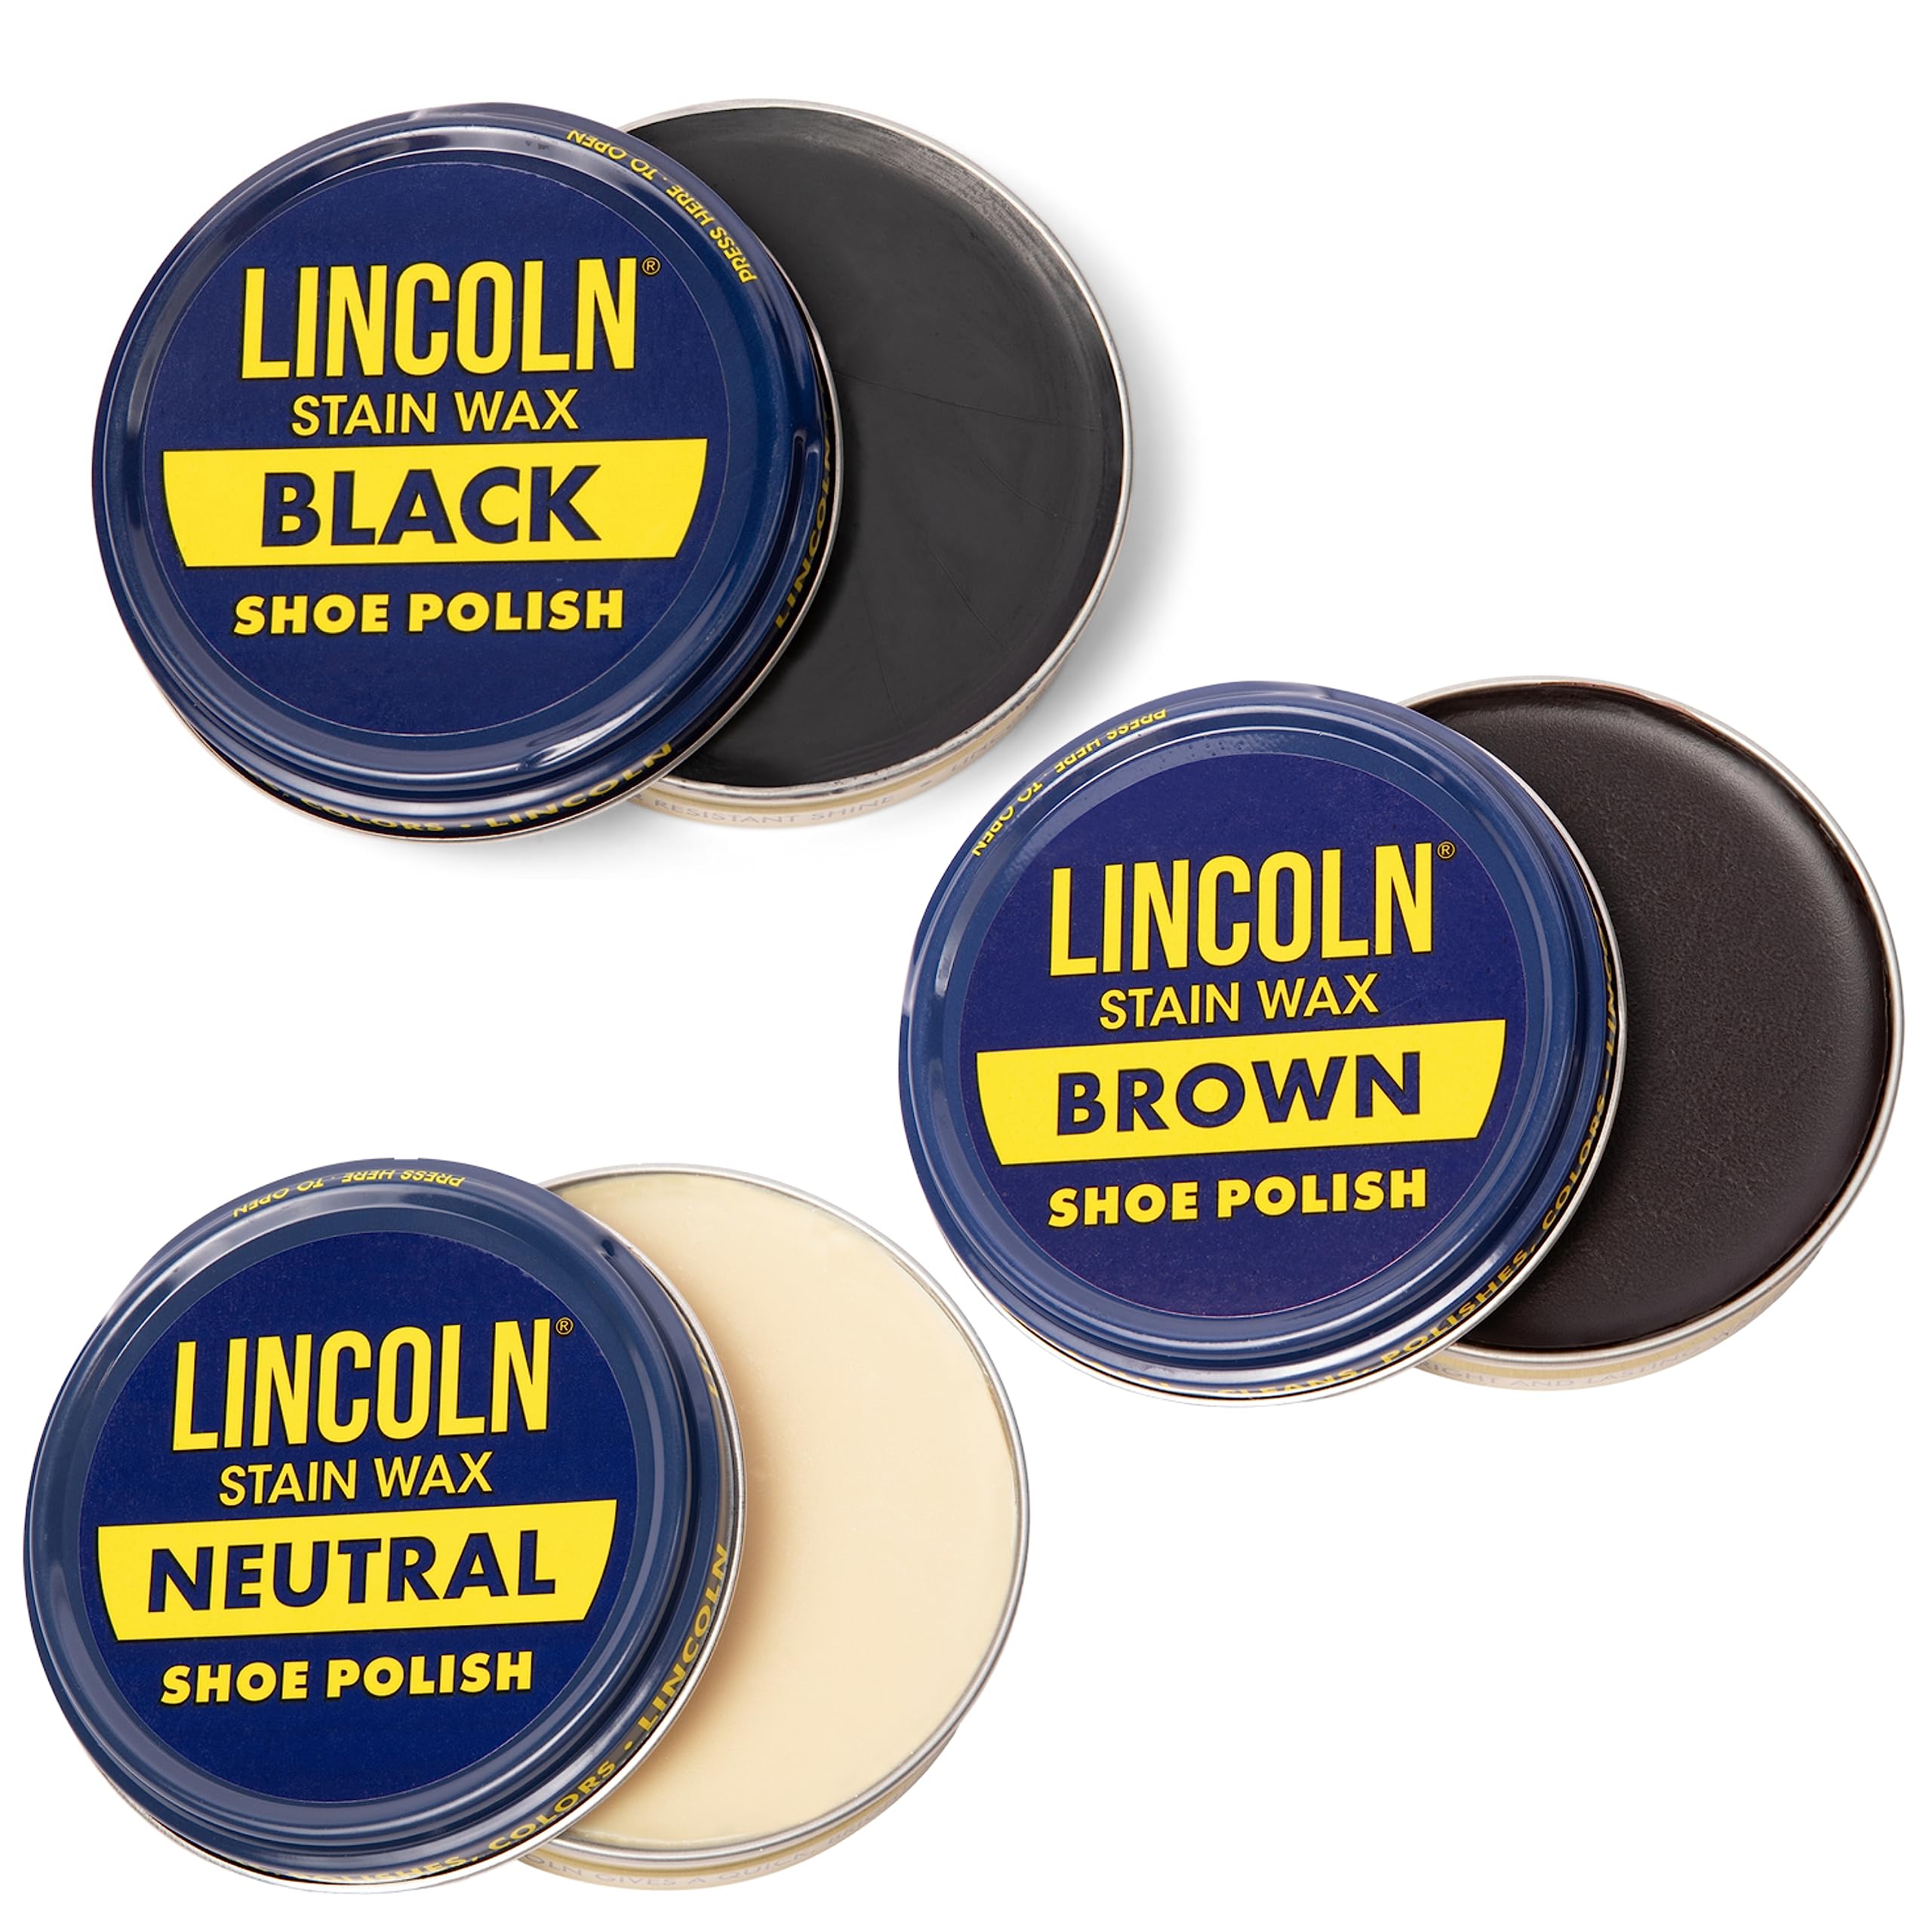 Lincoln Stain Wax Shoe Polish Black, Brown, Neutral Variety 3 fl oz, 3 Pack